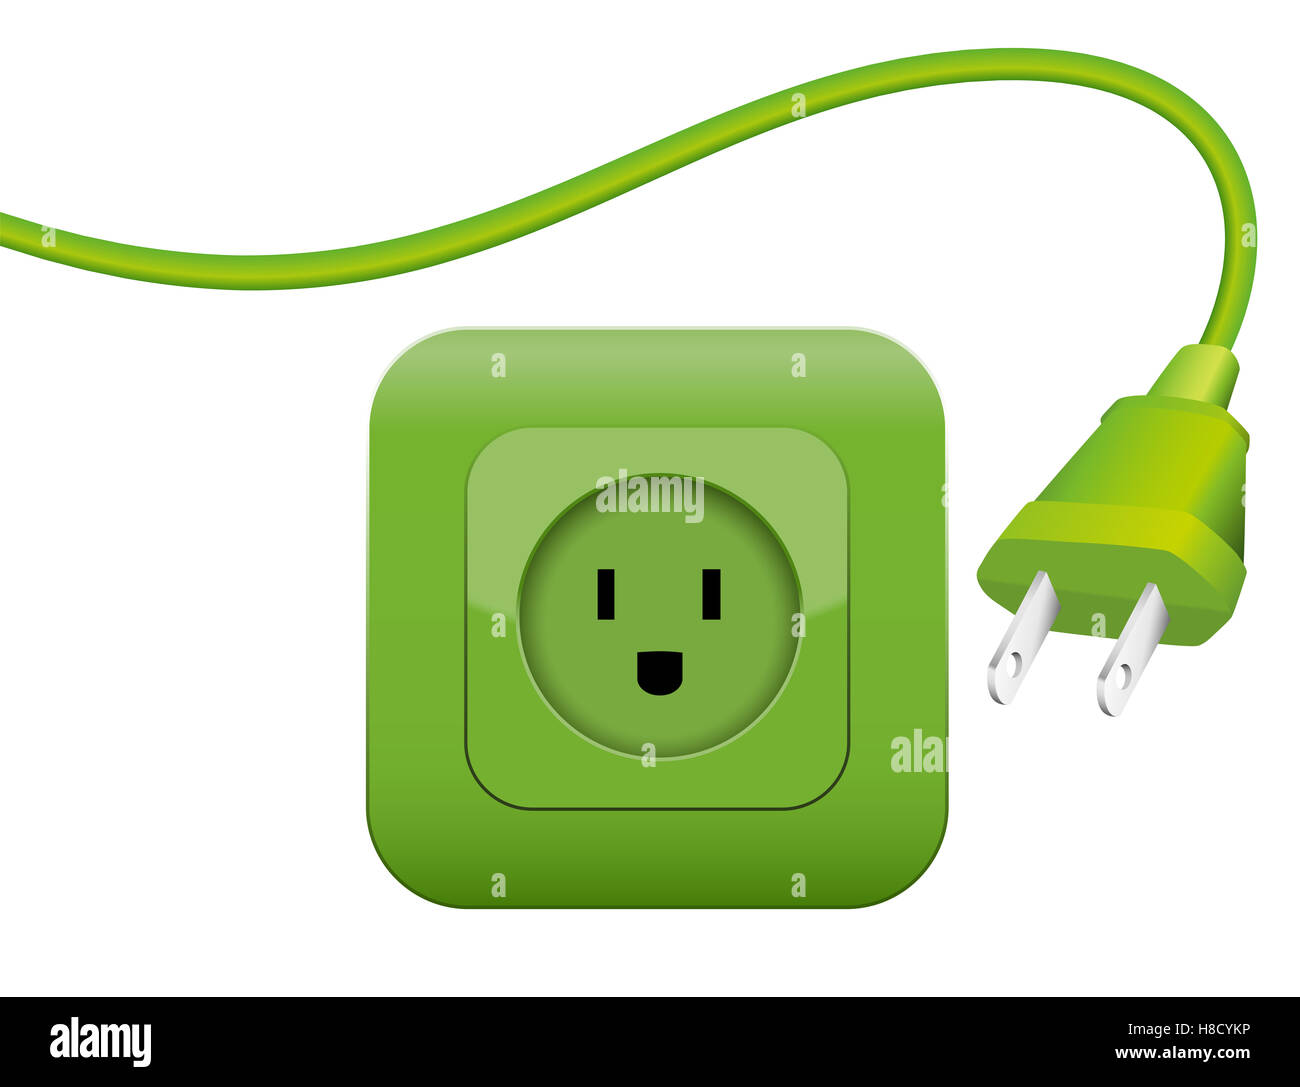 Grün Stecker und Steckdose - sauber Eco Power - grüne Energie - NEMA-Stecksystem. Stockfoto